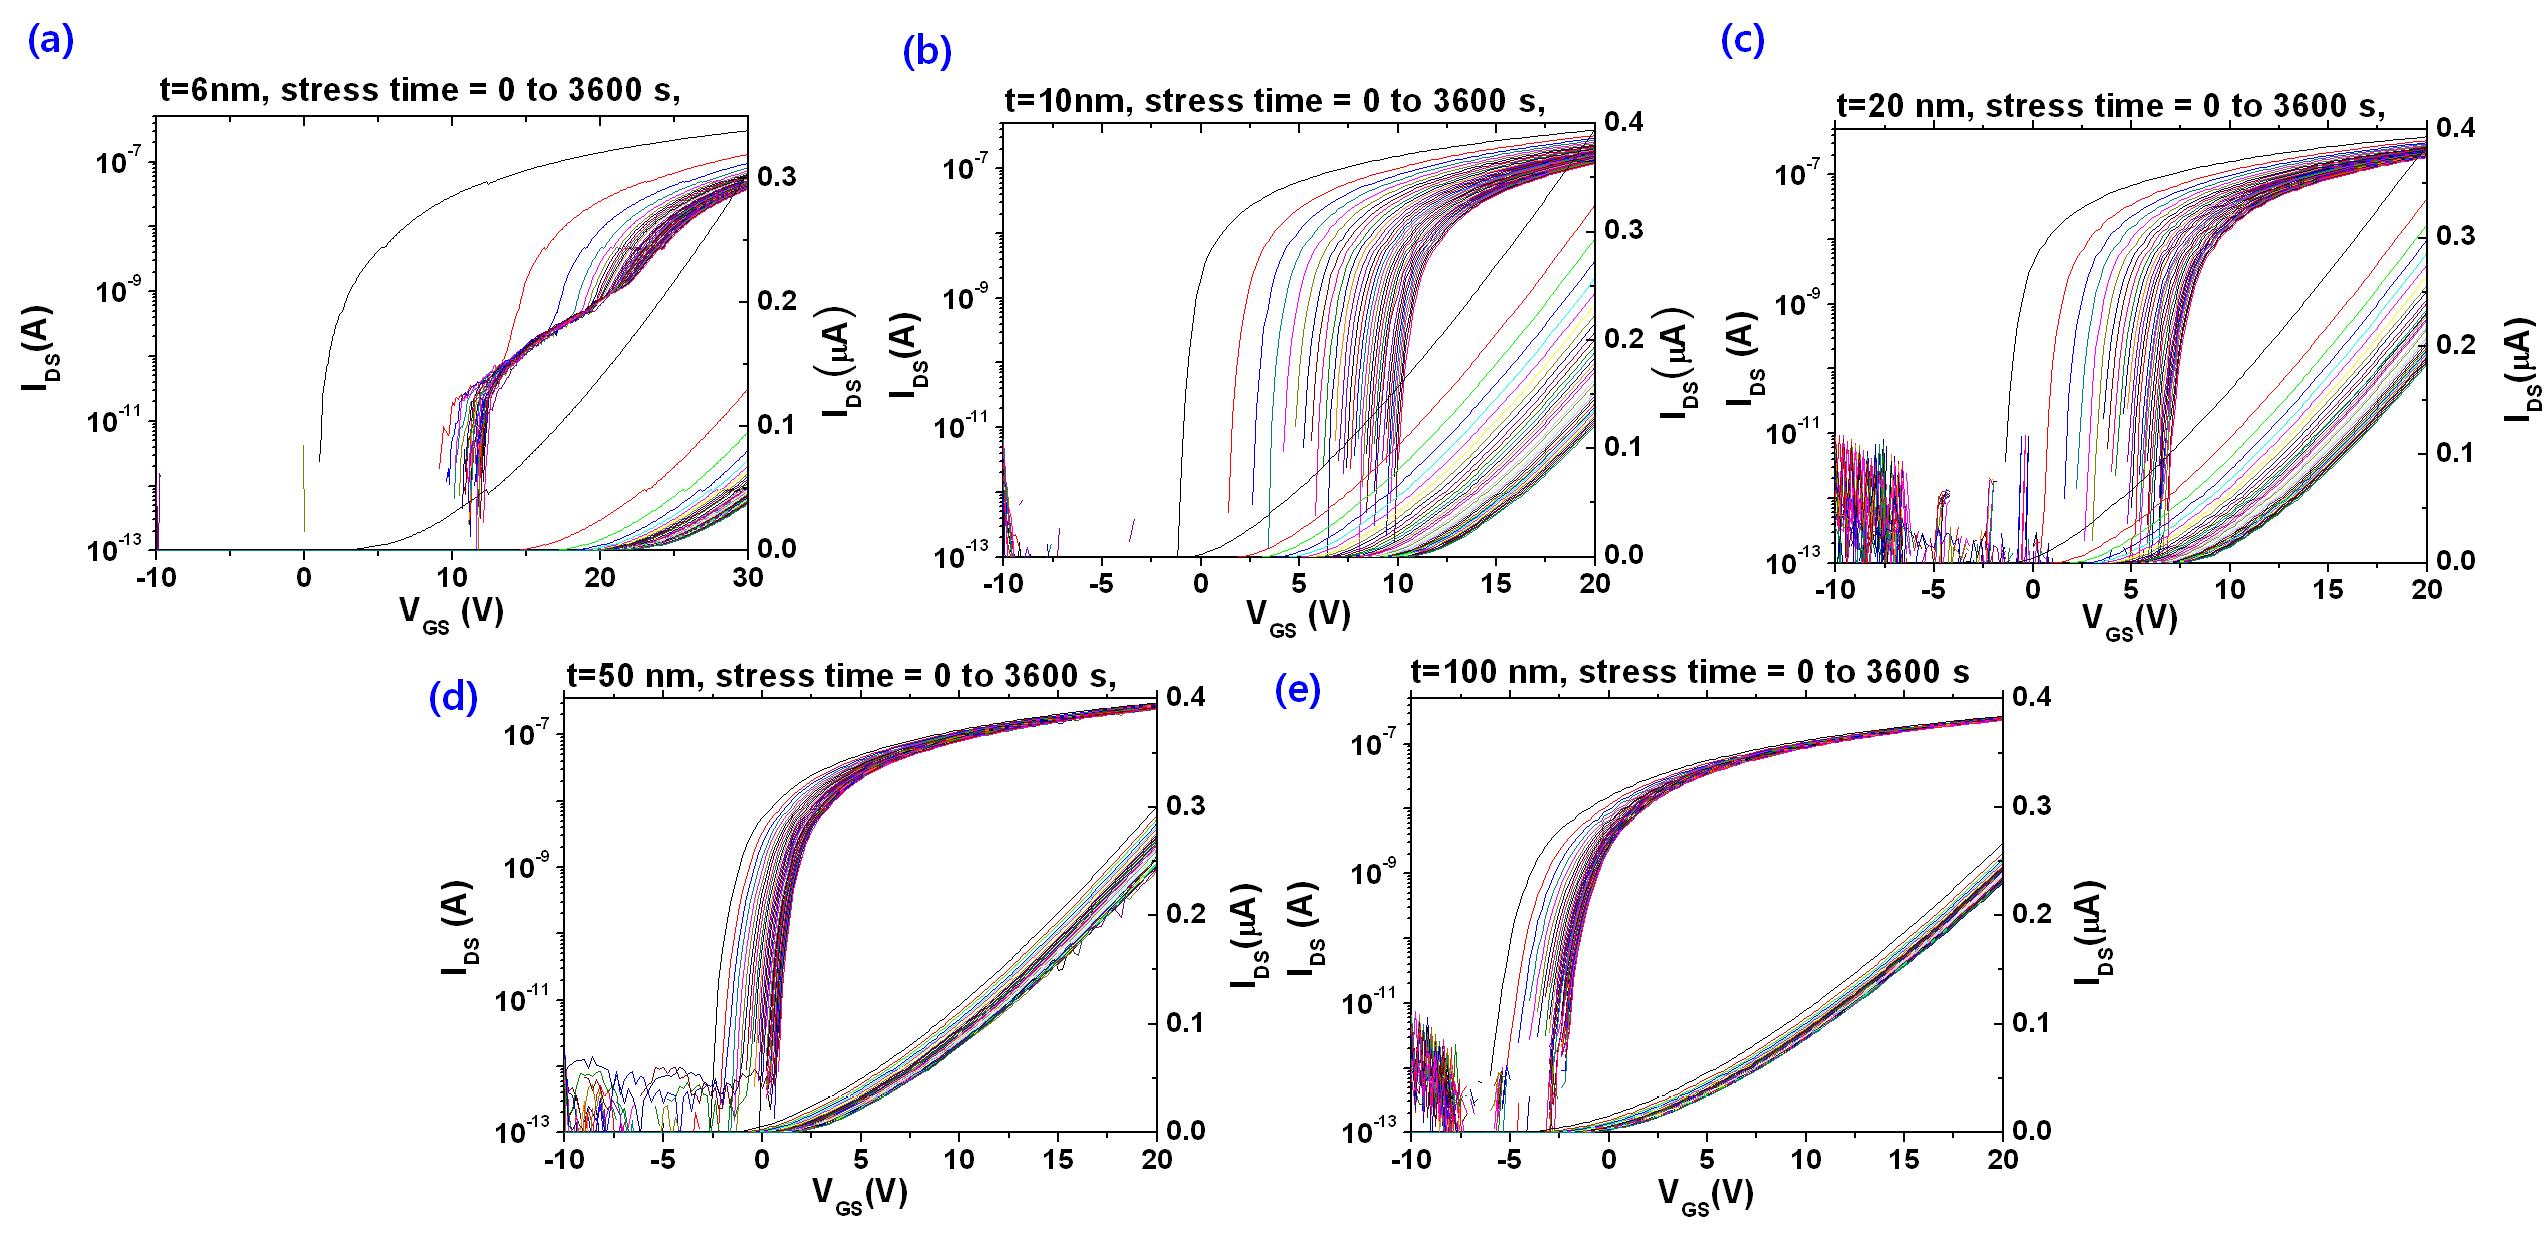 a-IGZO TFTs 의 transfer 특성곡선의 변화 (VGS=20 V): (a) t=6 nm, (b) t=10 nm, (c) t=20 nm, (d) t=50 nm, and (e) t=100 nm